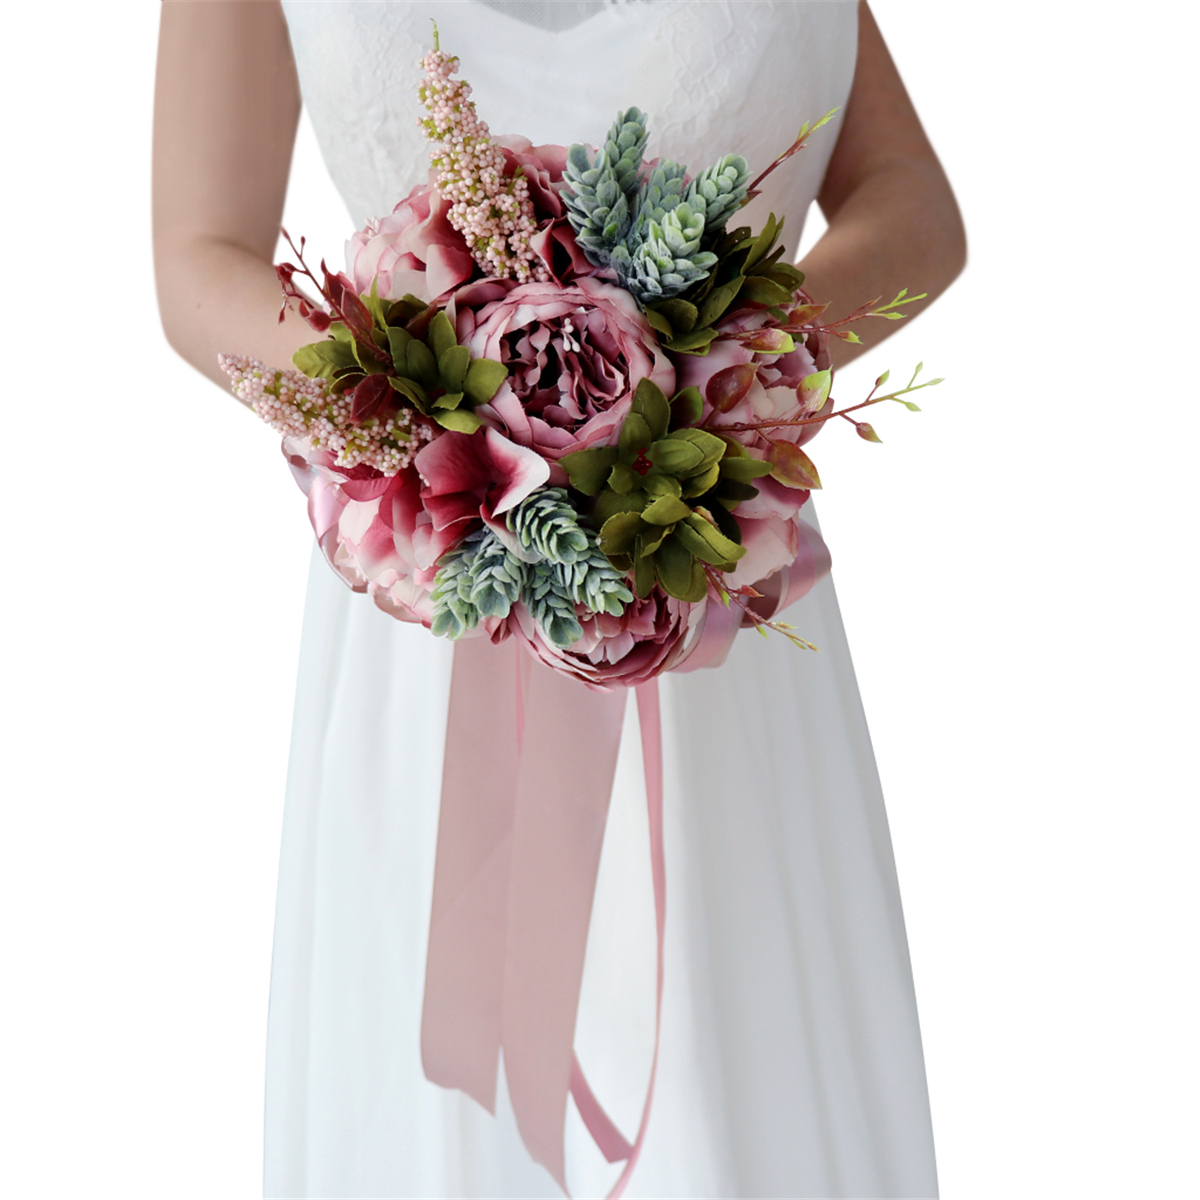 Wedding-Bridal-Bouquets-Handmade-Artificial-Flowers-Decorations-Bride-Accessories-1643090-4